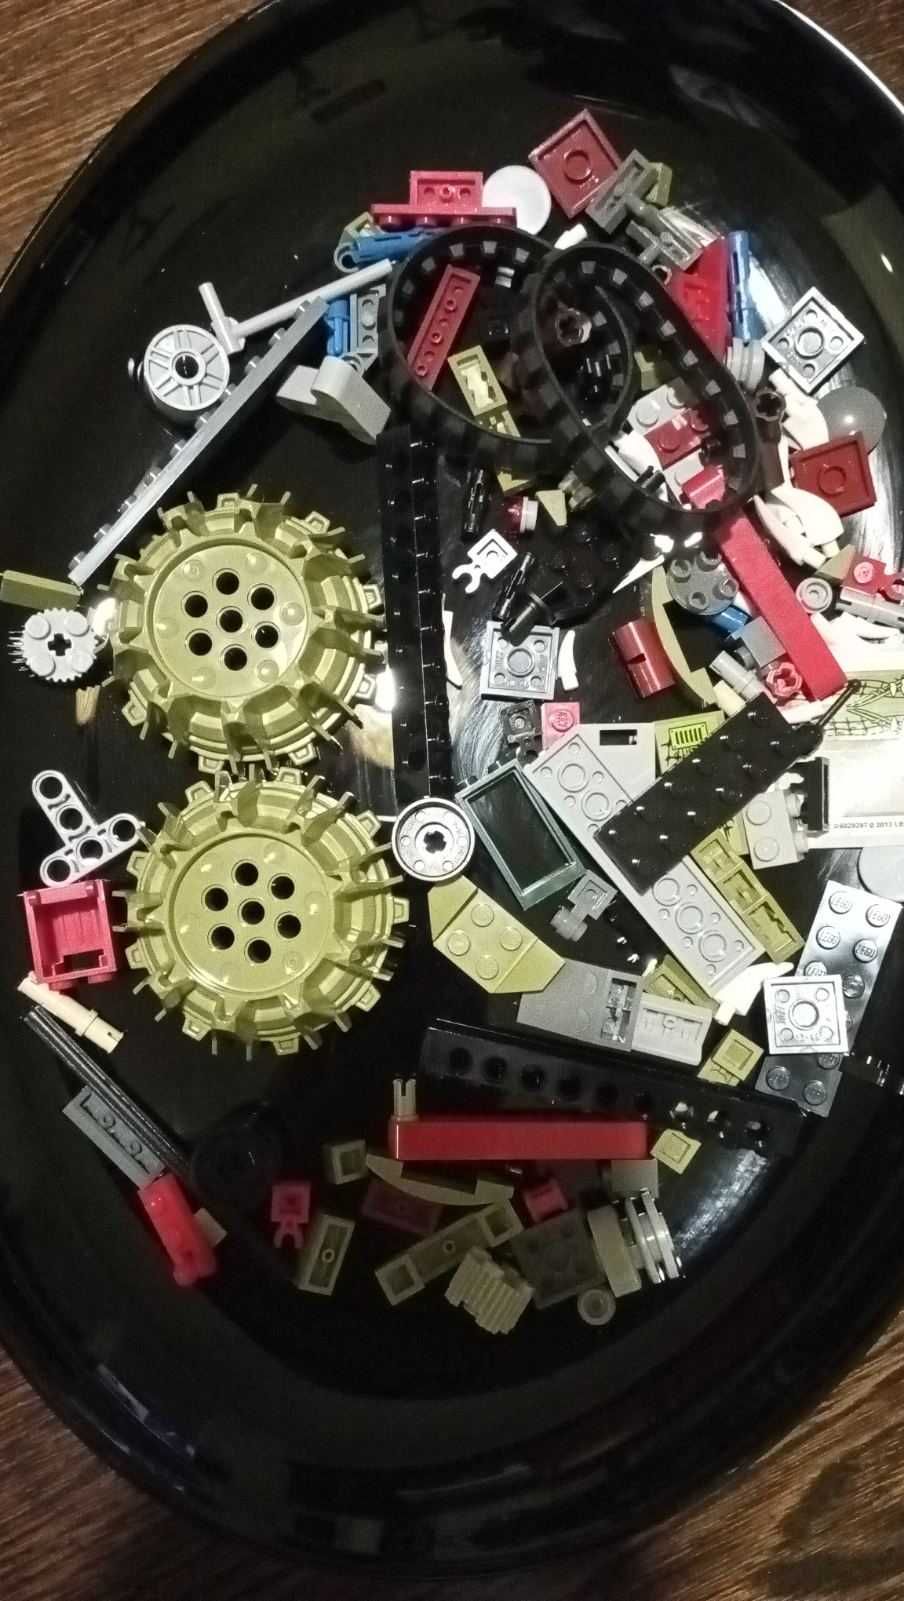 Lego chima 70001, 76158, 70420